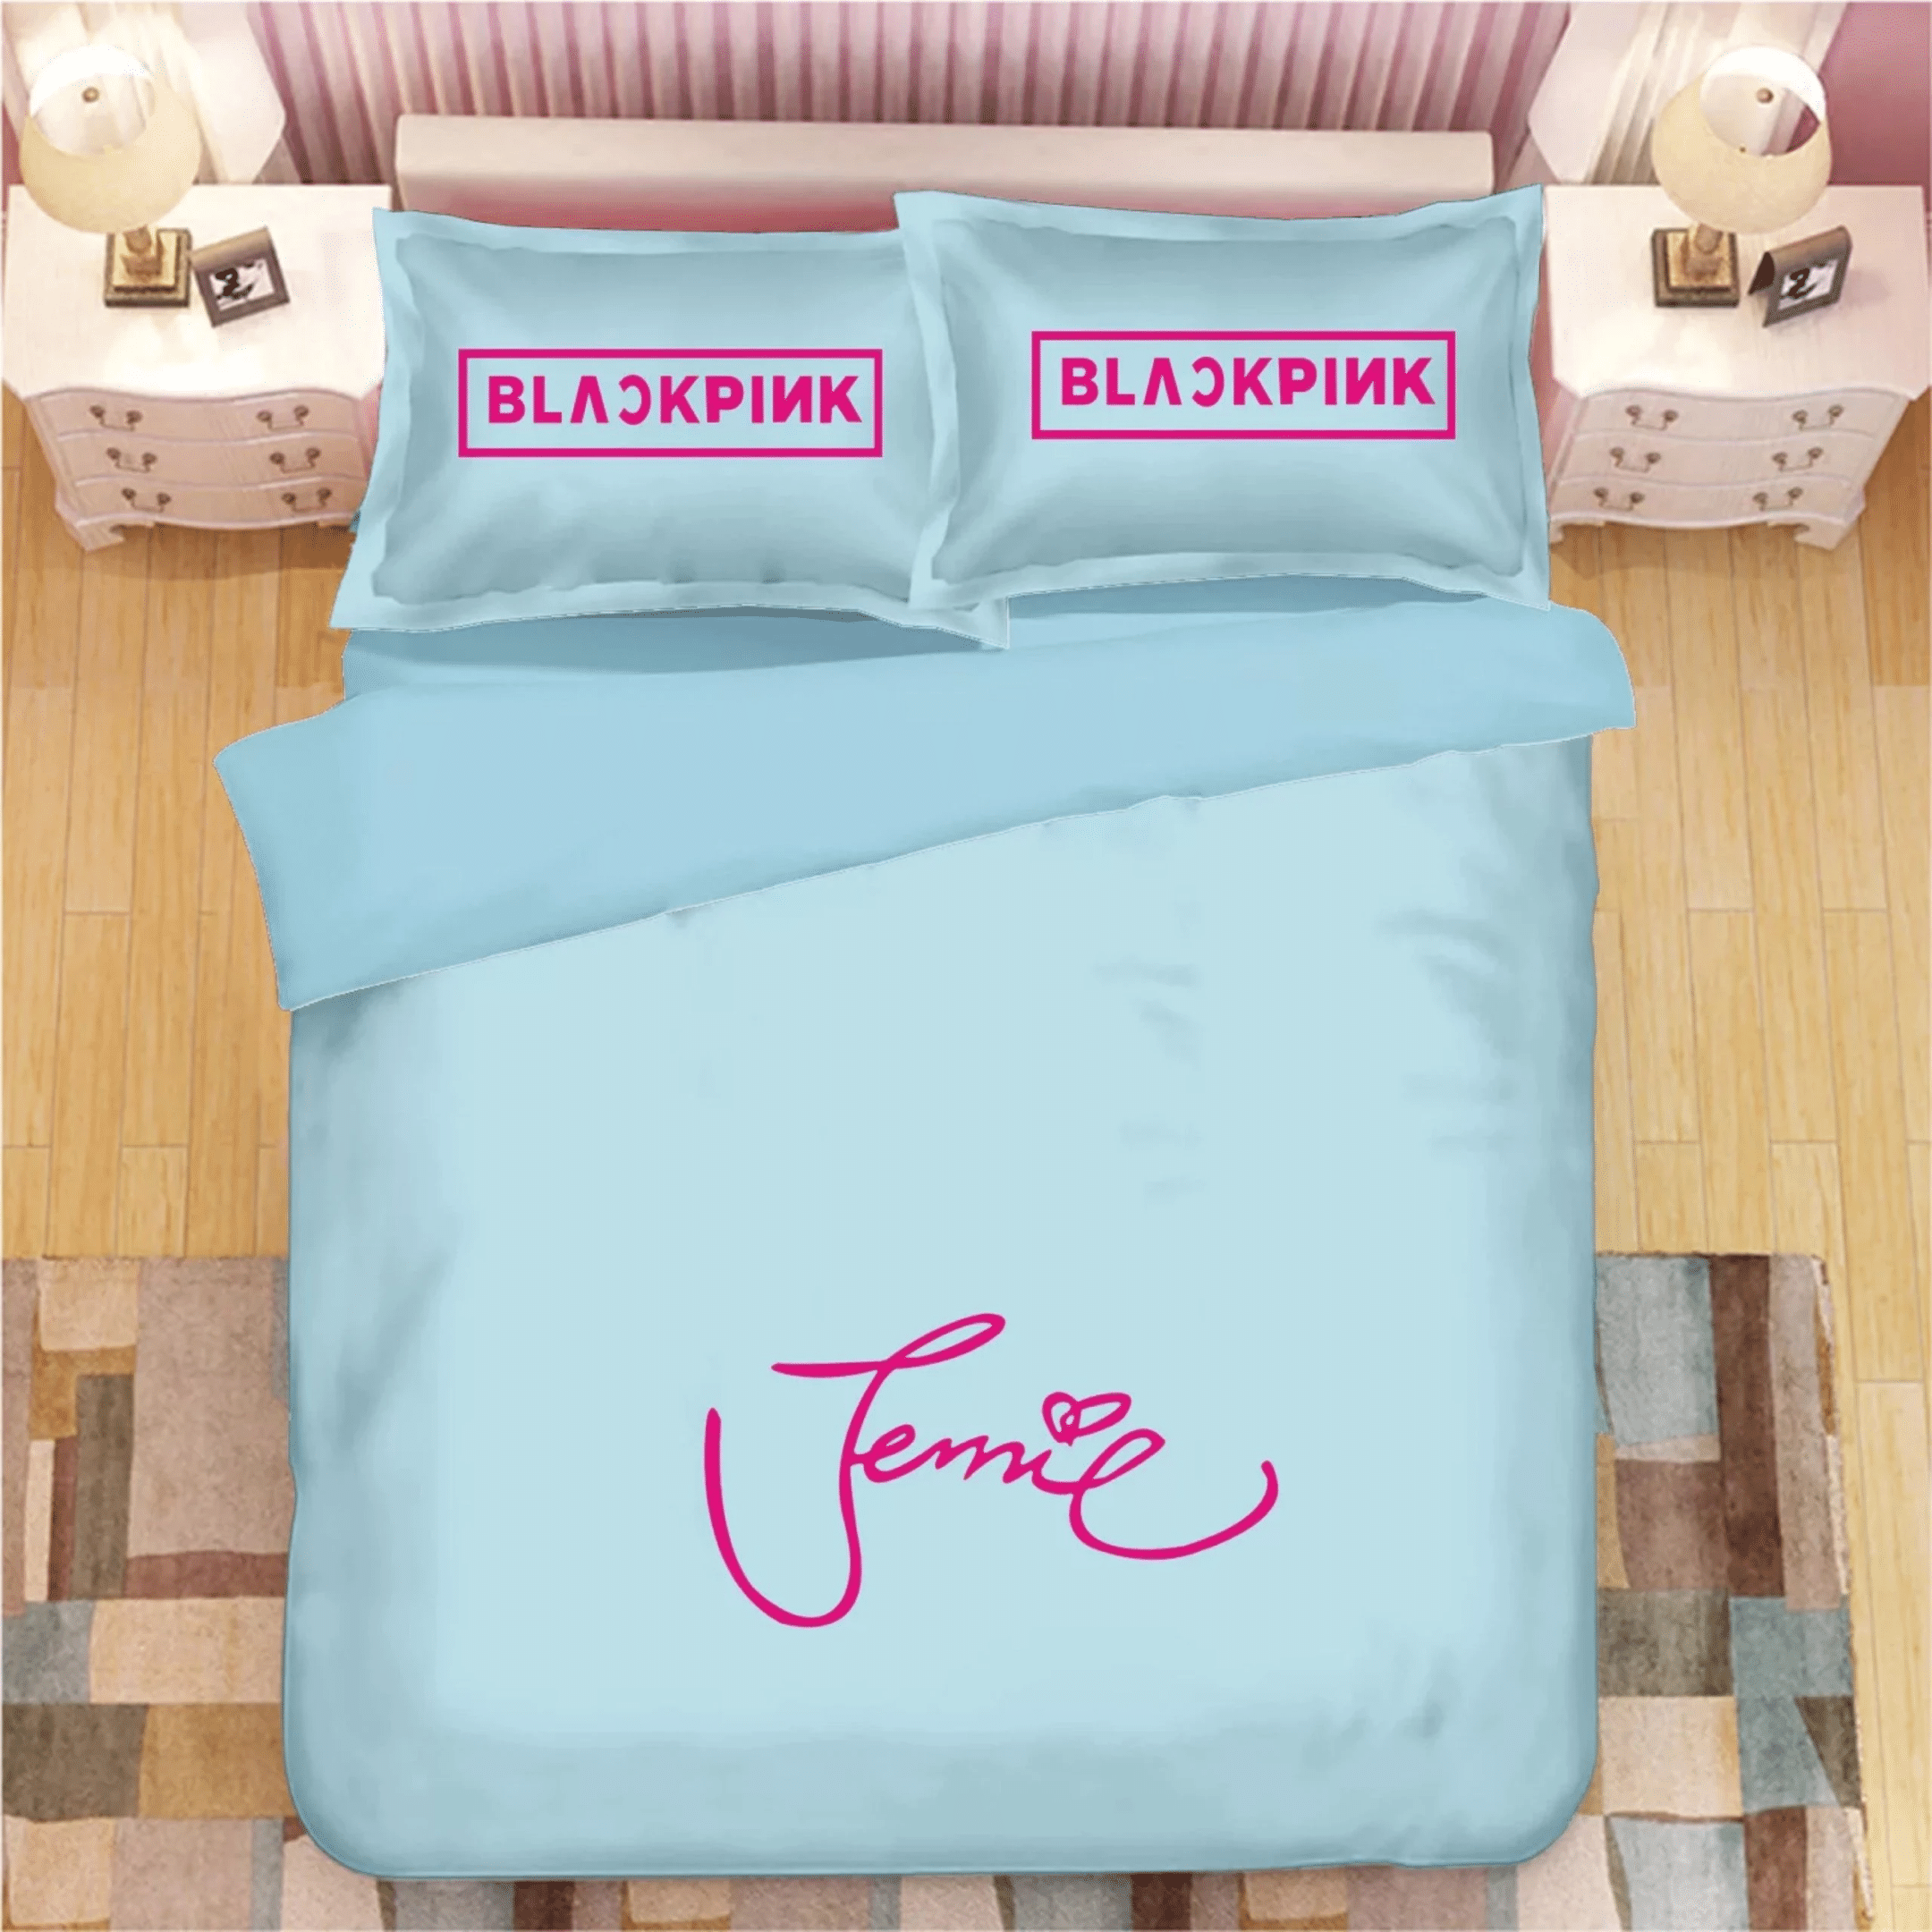 Kpop Blackpink 1 Duvet Cover Pillowcase Bedding Sets Home Decor